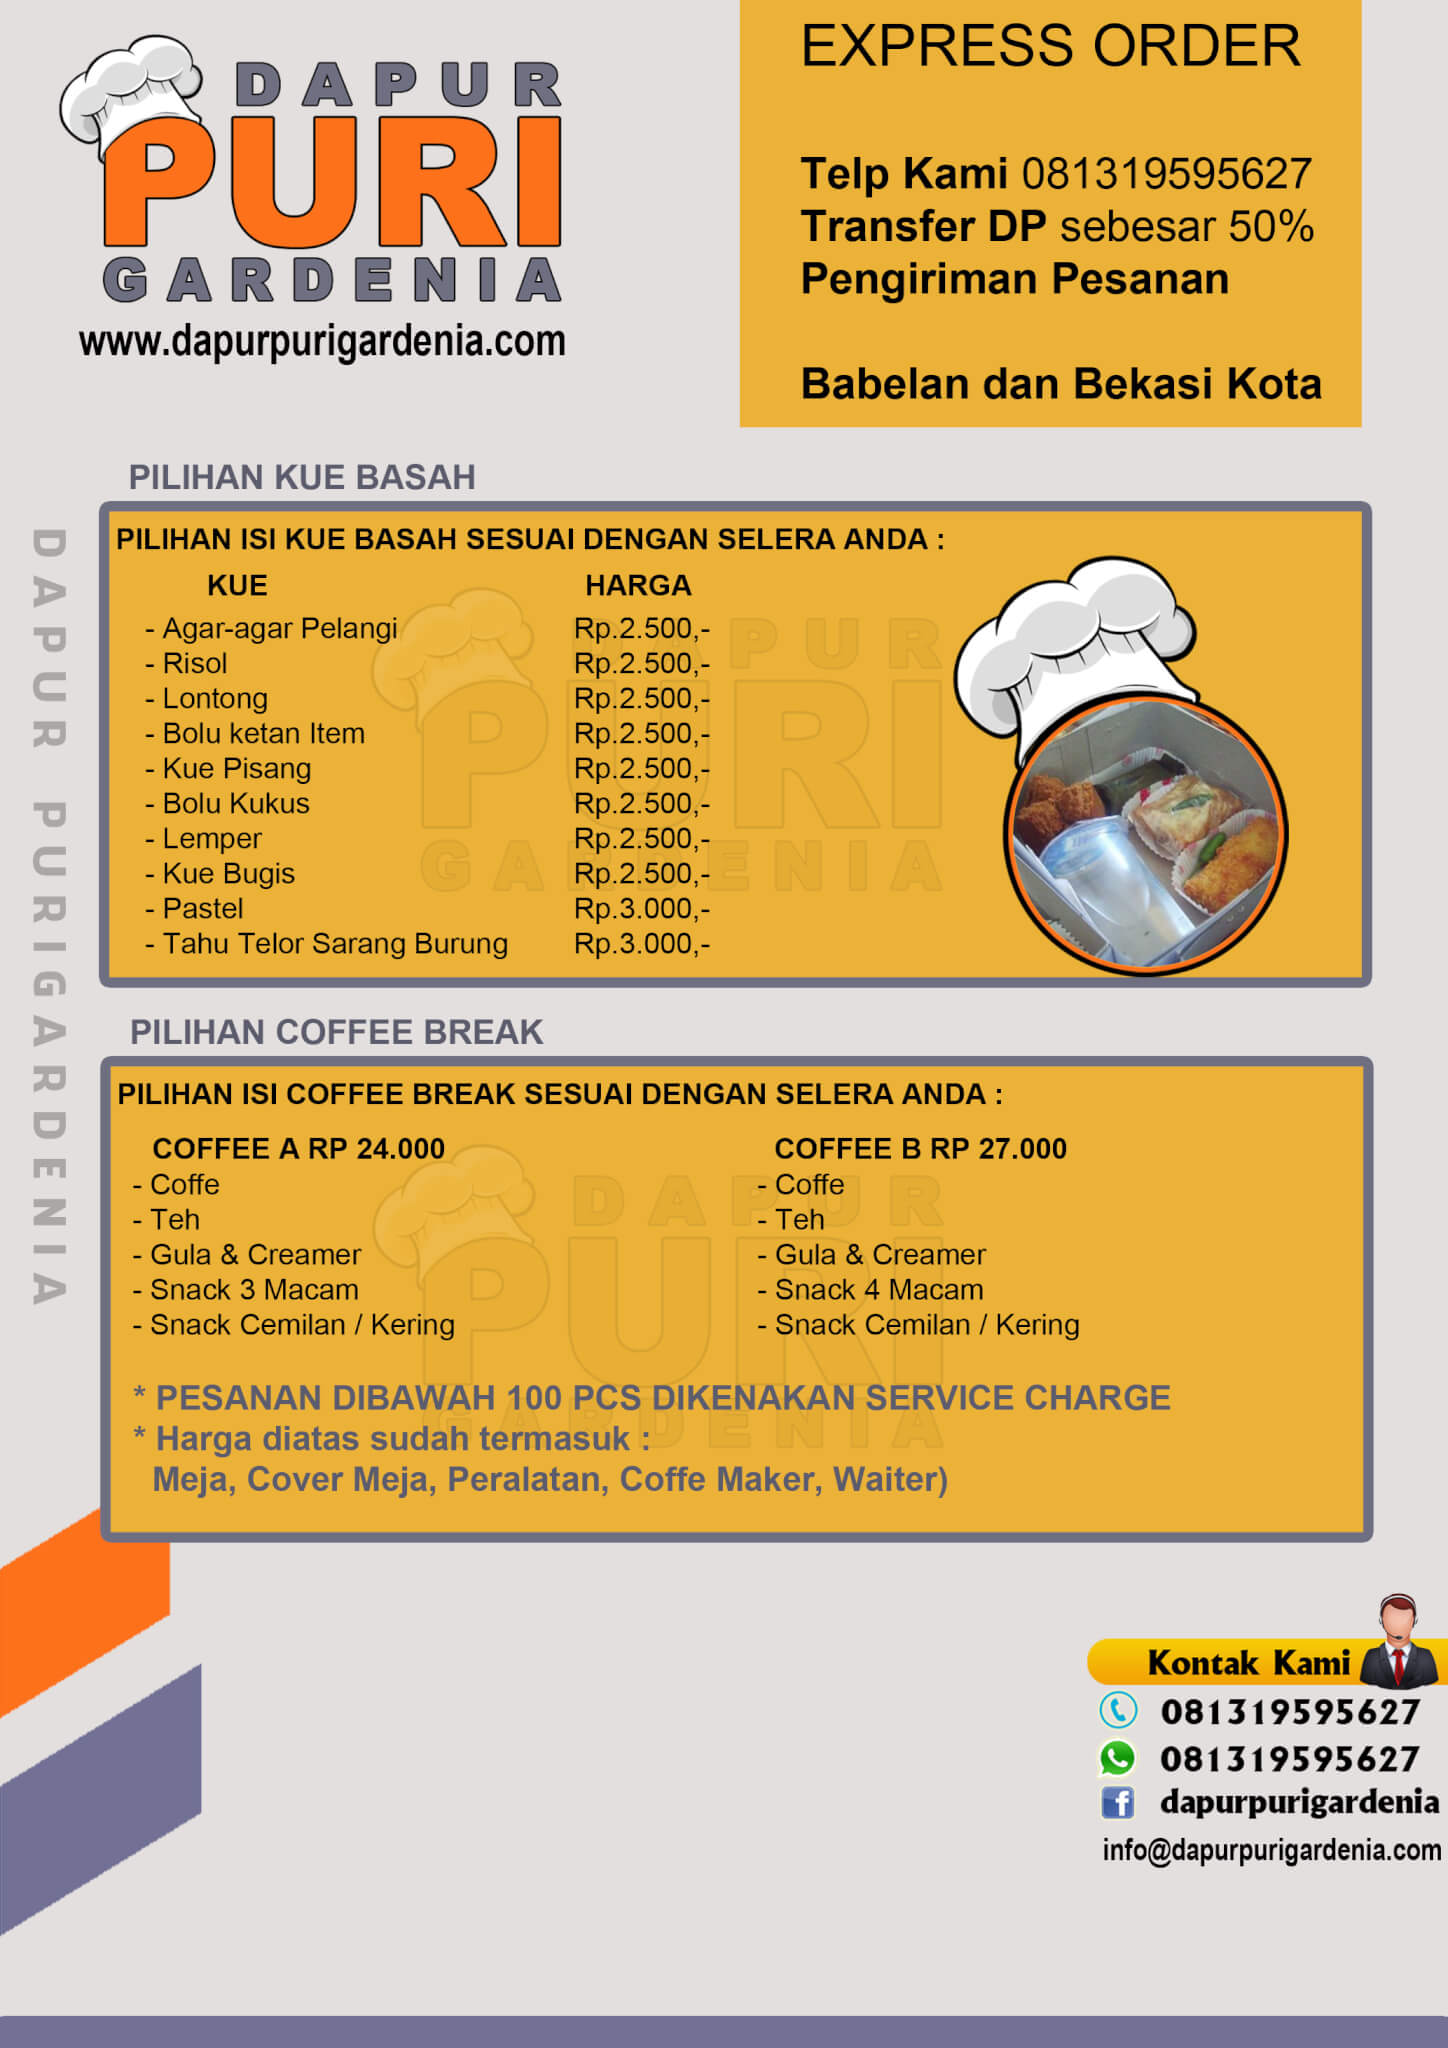 Kue Basah Coffee Break